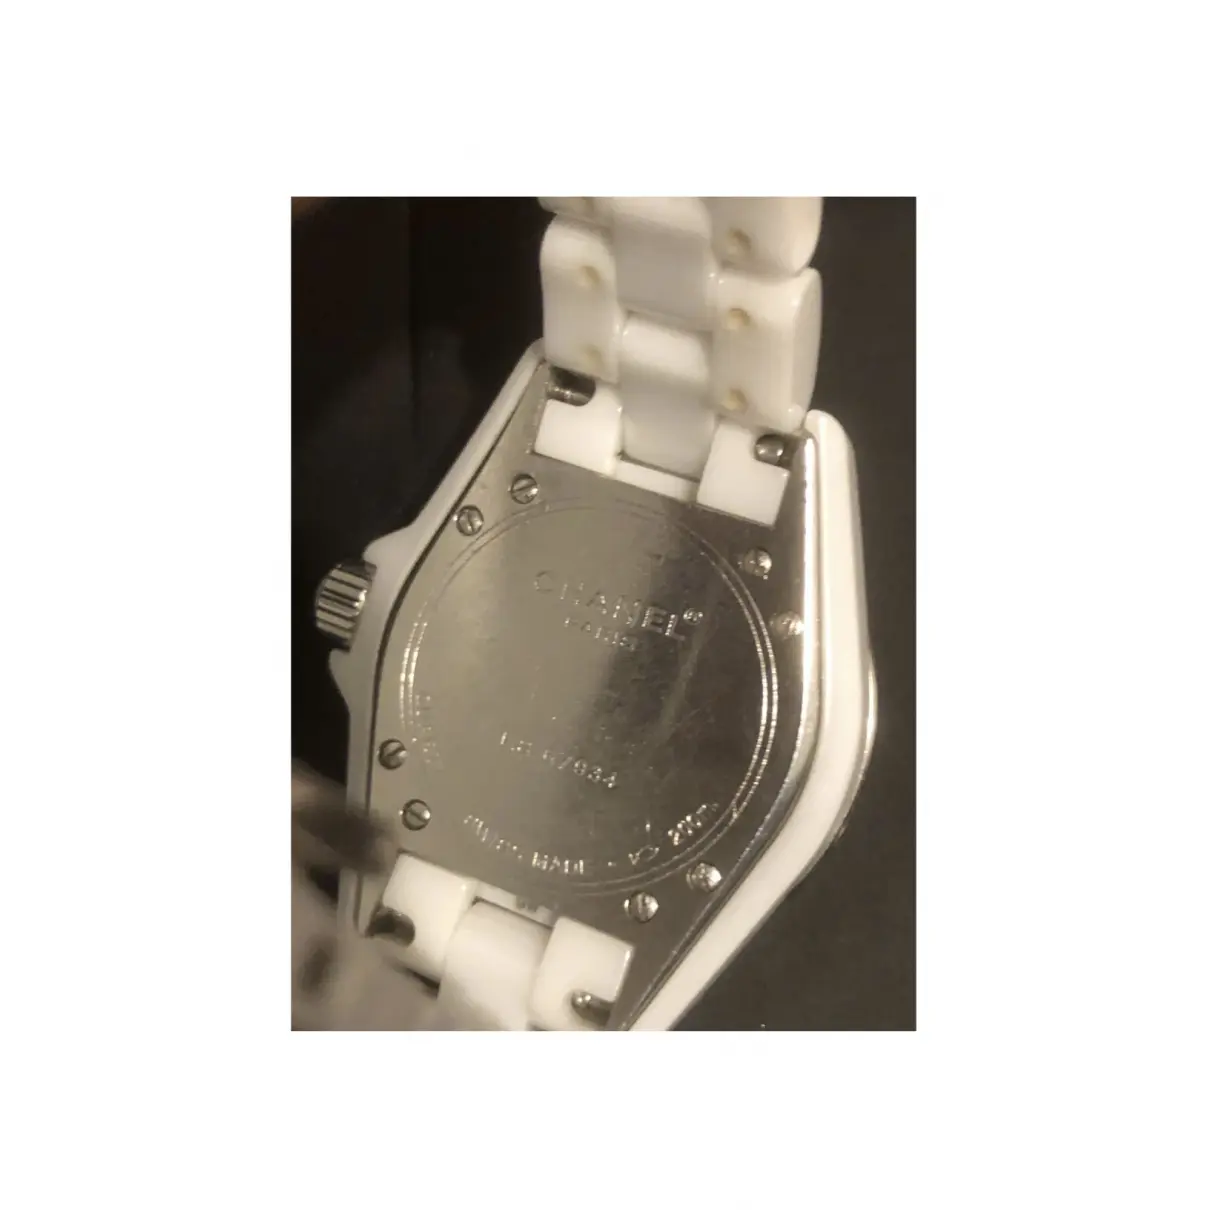 Buy Chanel J12 Quartz ceramic watch online